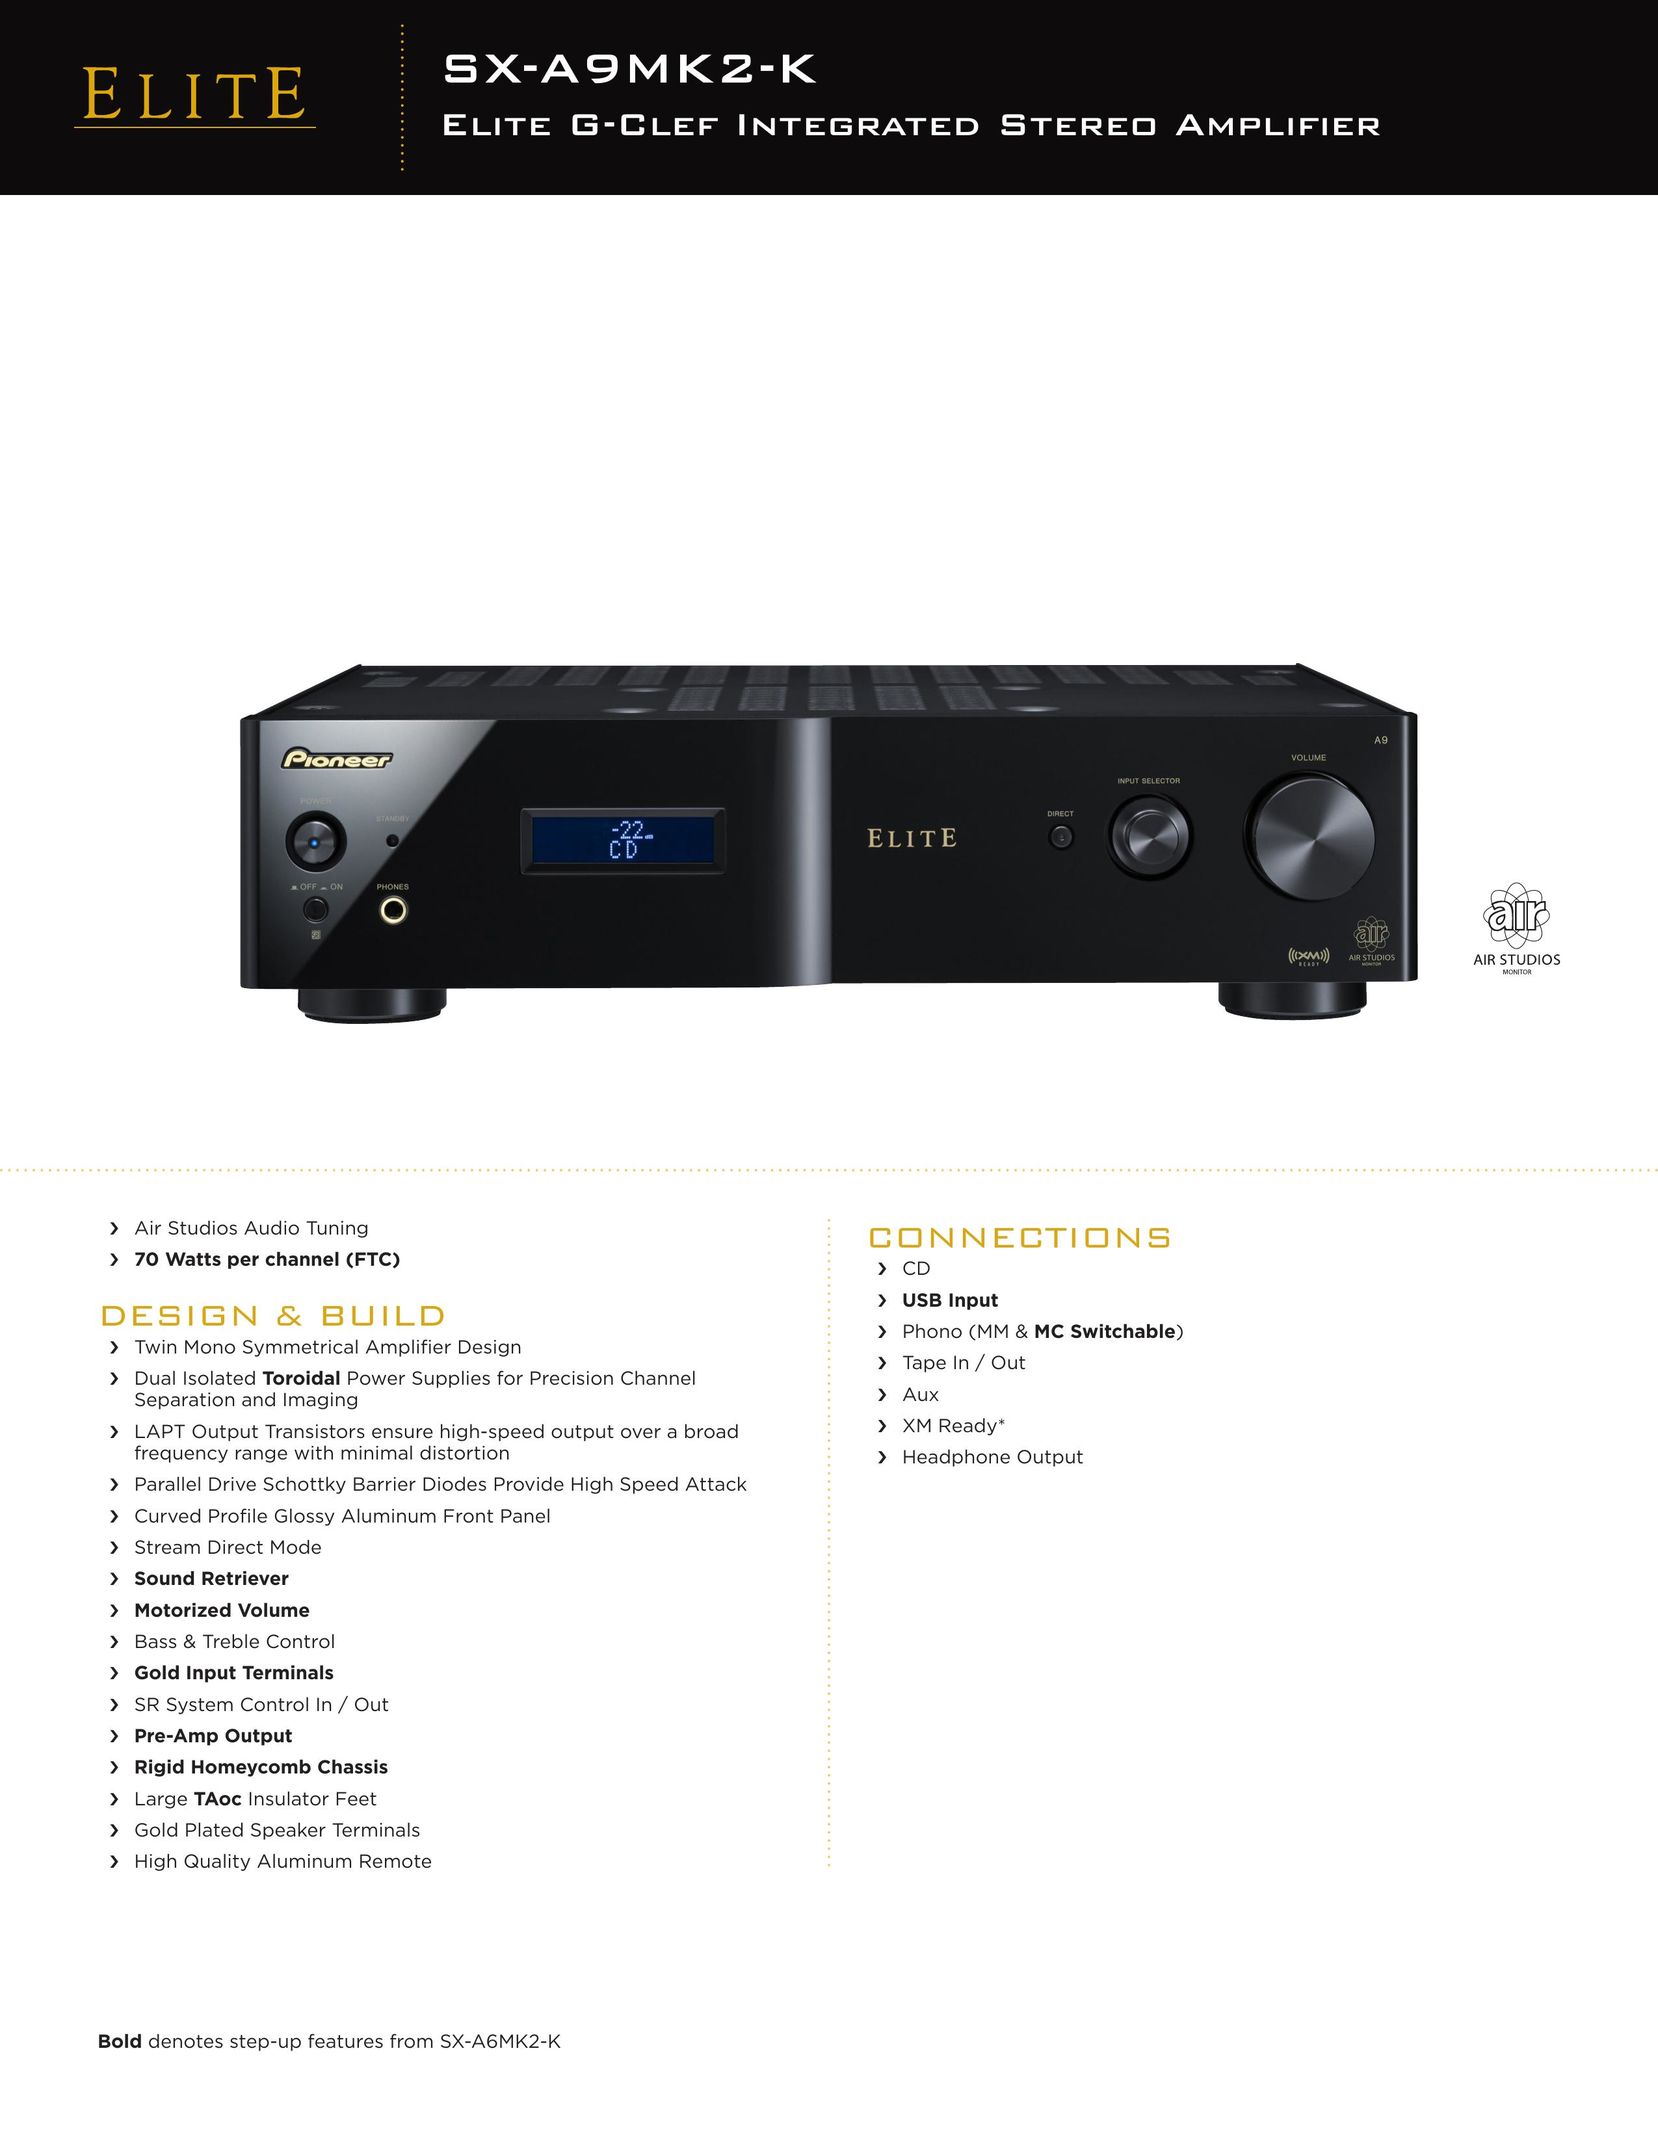 Pioneer SX-A9MK2-K Stereo Amplifier User Manual